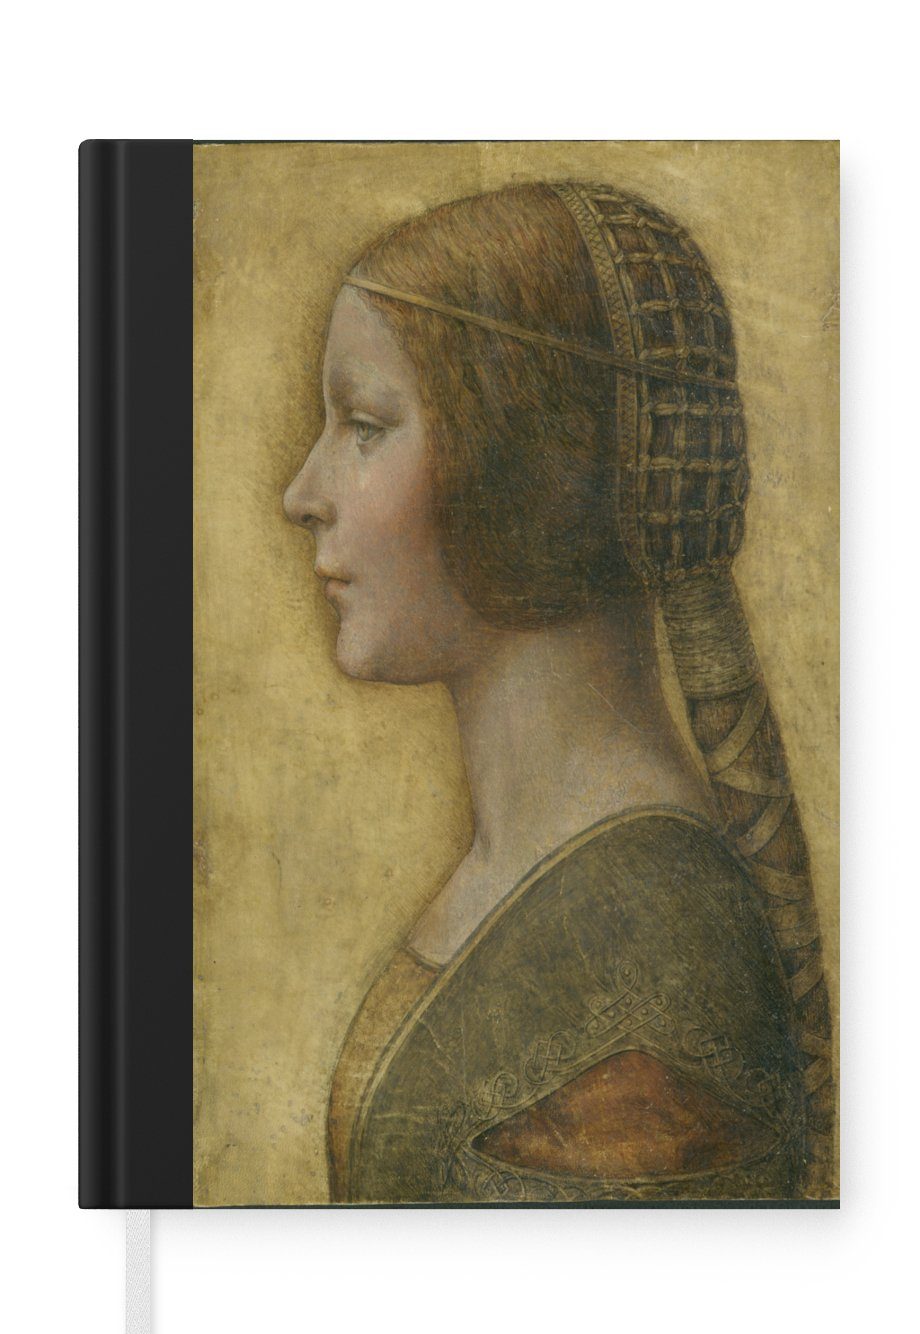 MuchoWow Notizbuch La Bella Principessa - Leonardo da Vinci, Journal, Merkzettel, Tagebuch, Notizheft, A5, 98 Seiten, Haushaltsbuch